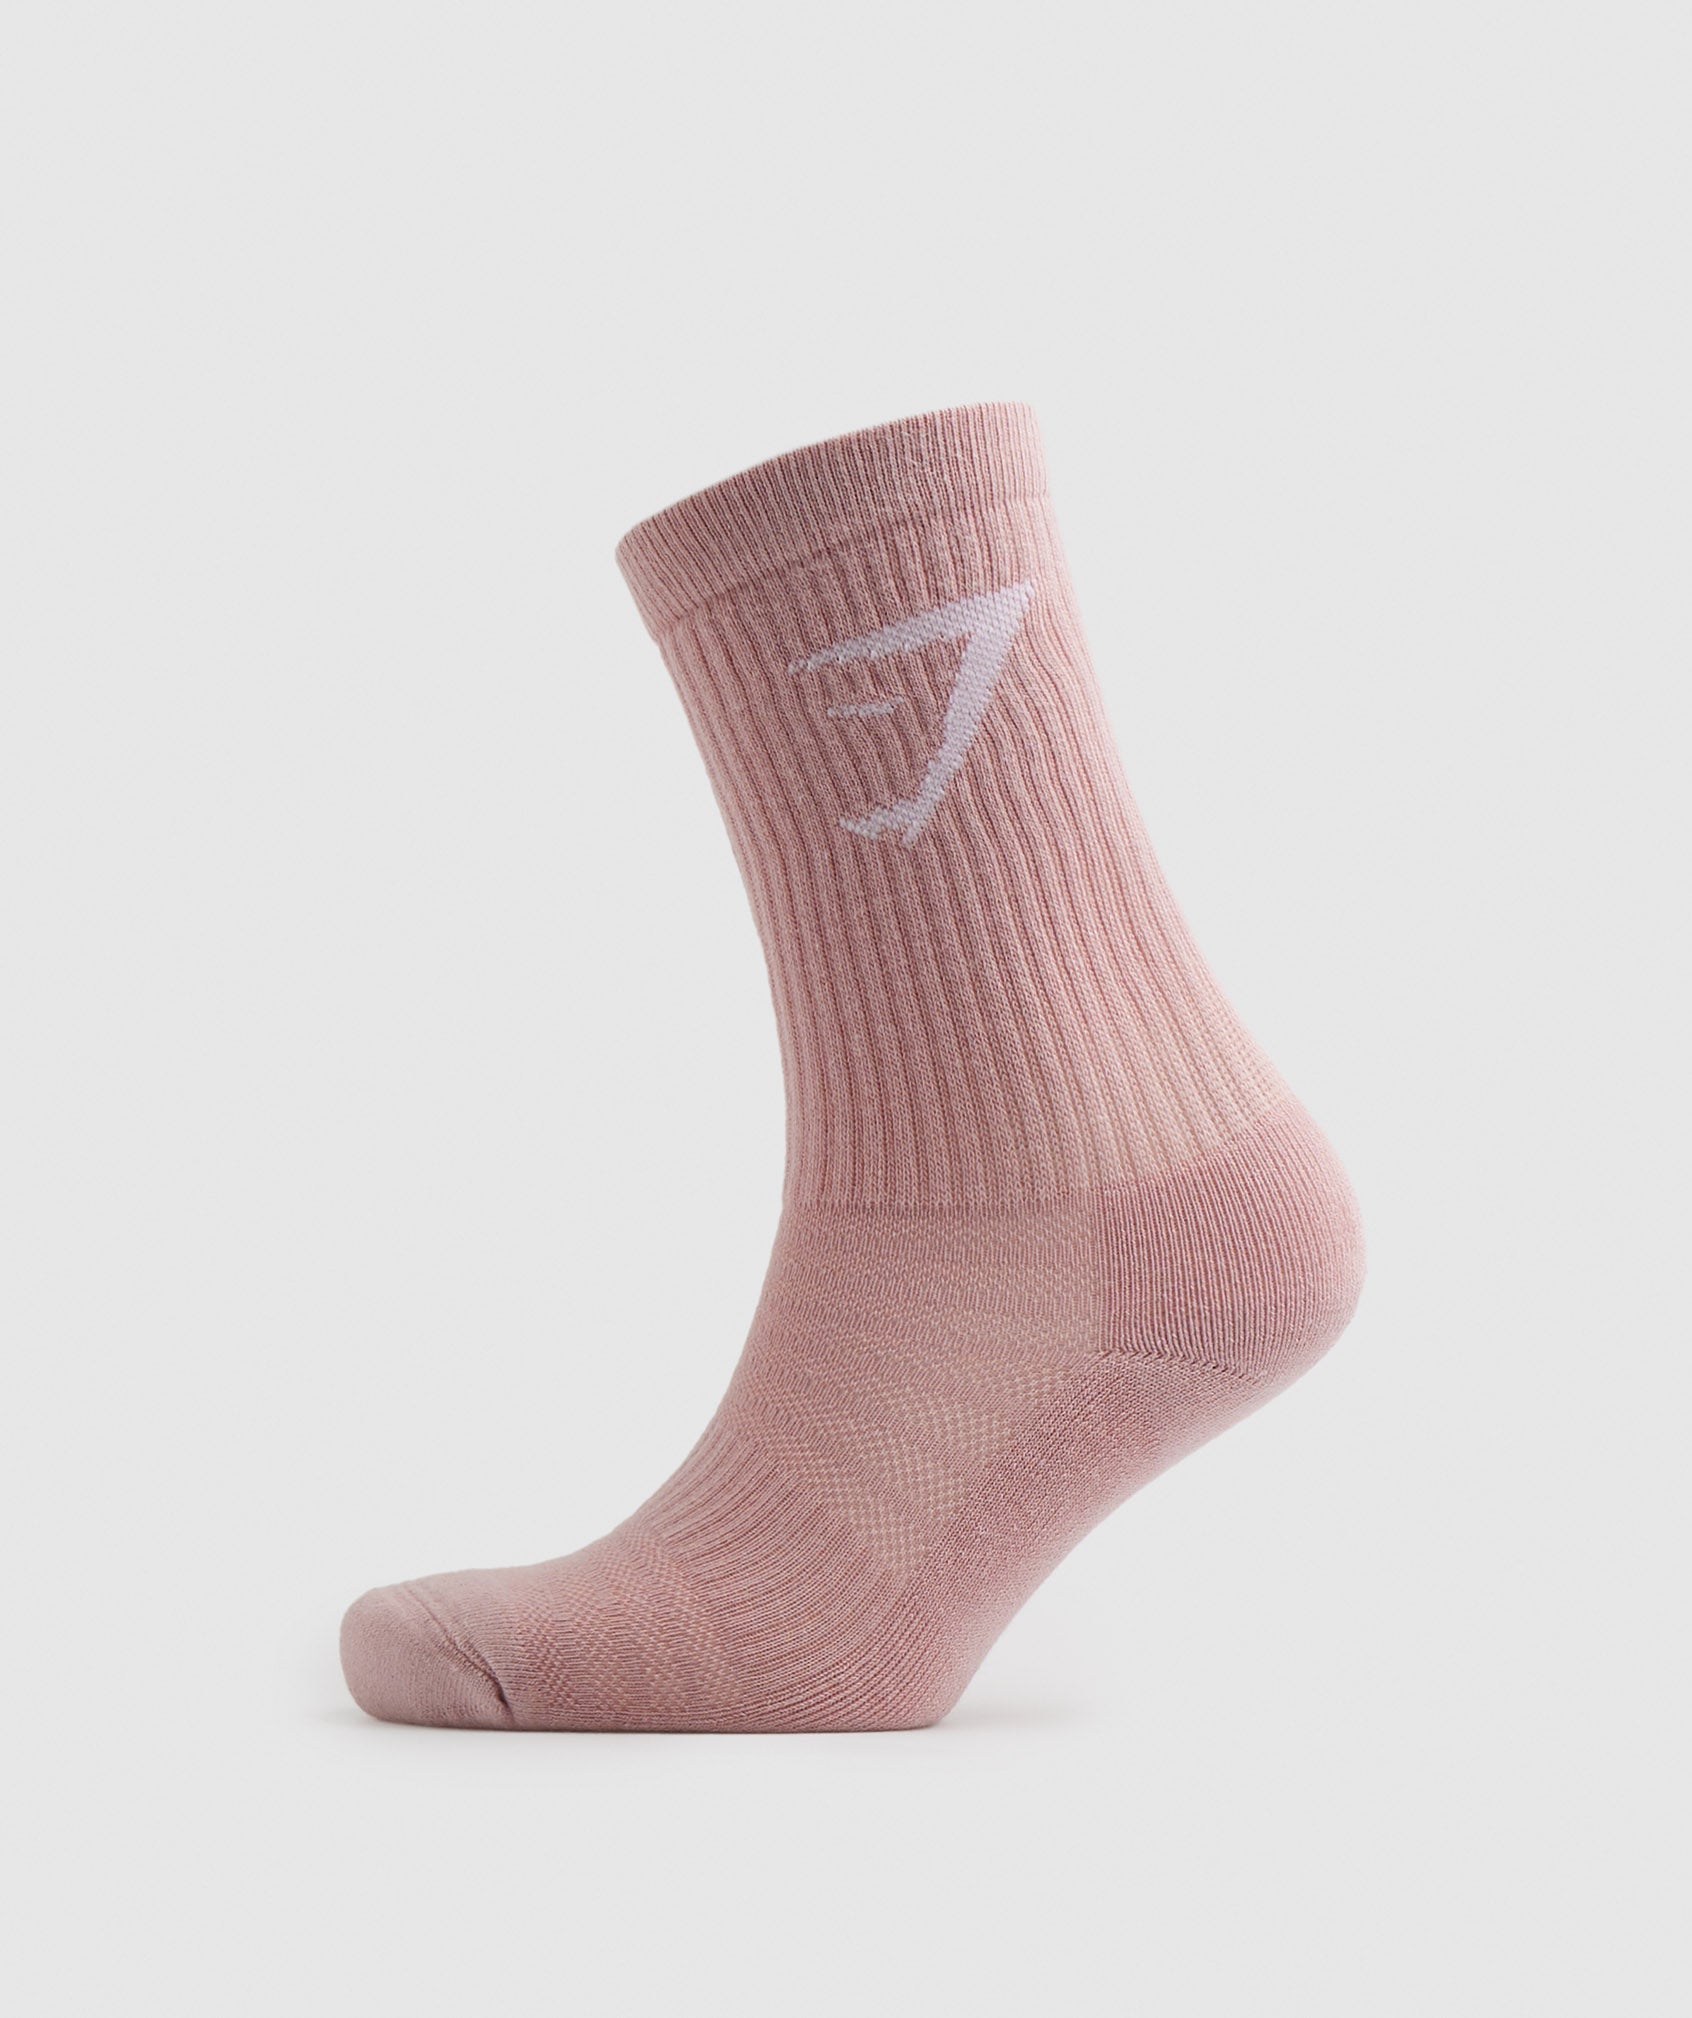 Crew Socks 5pk in Pink/Brown/Grey/Green/Olive - view 7